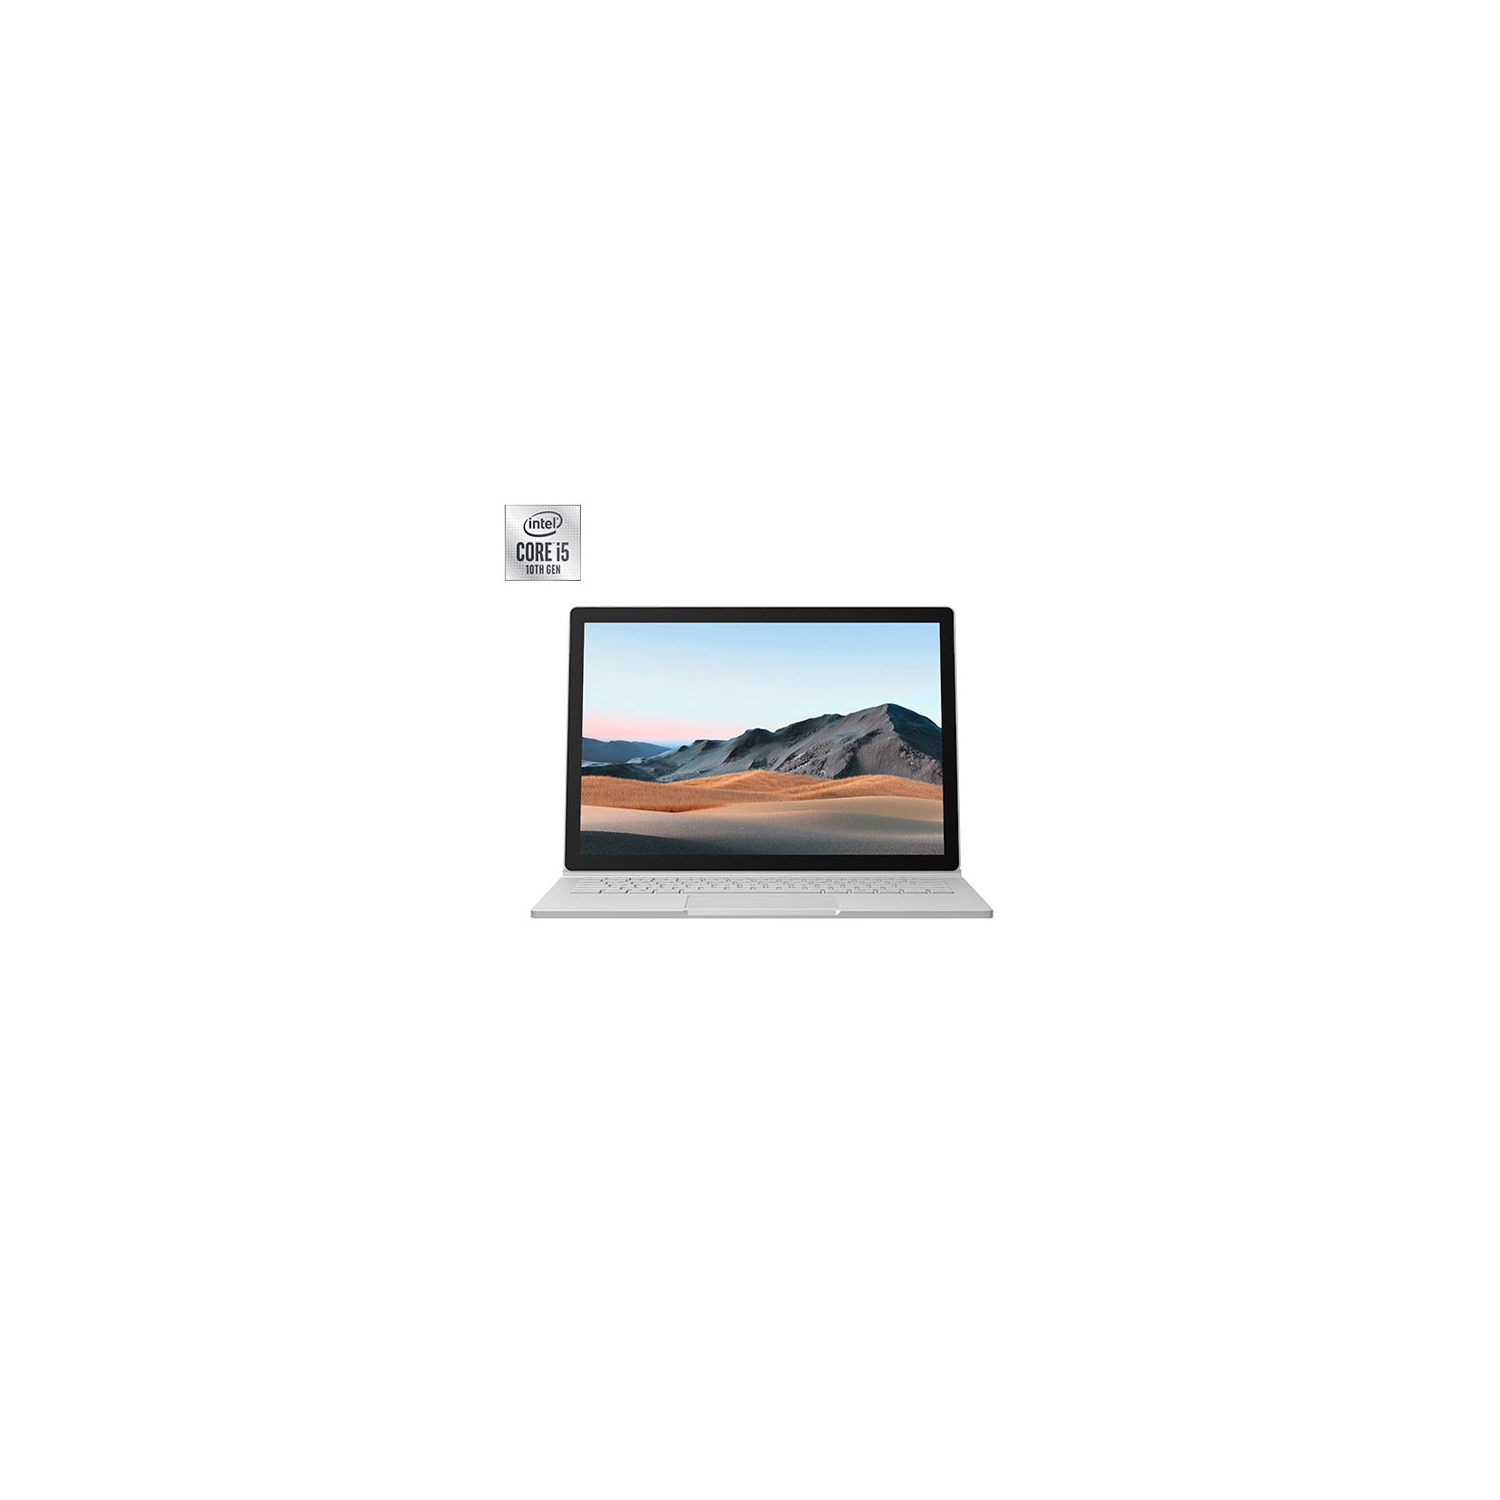 Microsoft Surface Book 3 13.5" 2-in-1 Laptop - Platinum (Intel Ci5-1035G7/256GB SSD/8GB RAM) - French - Open Box